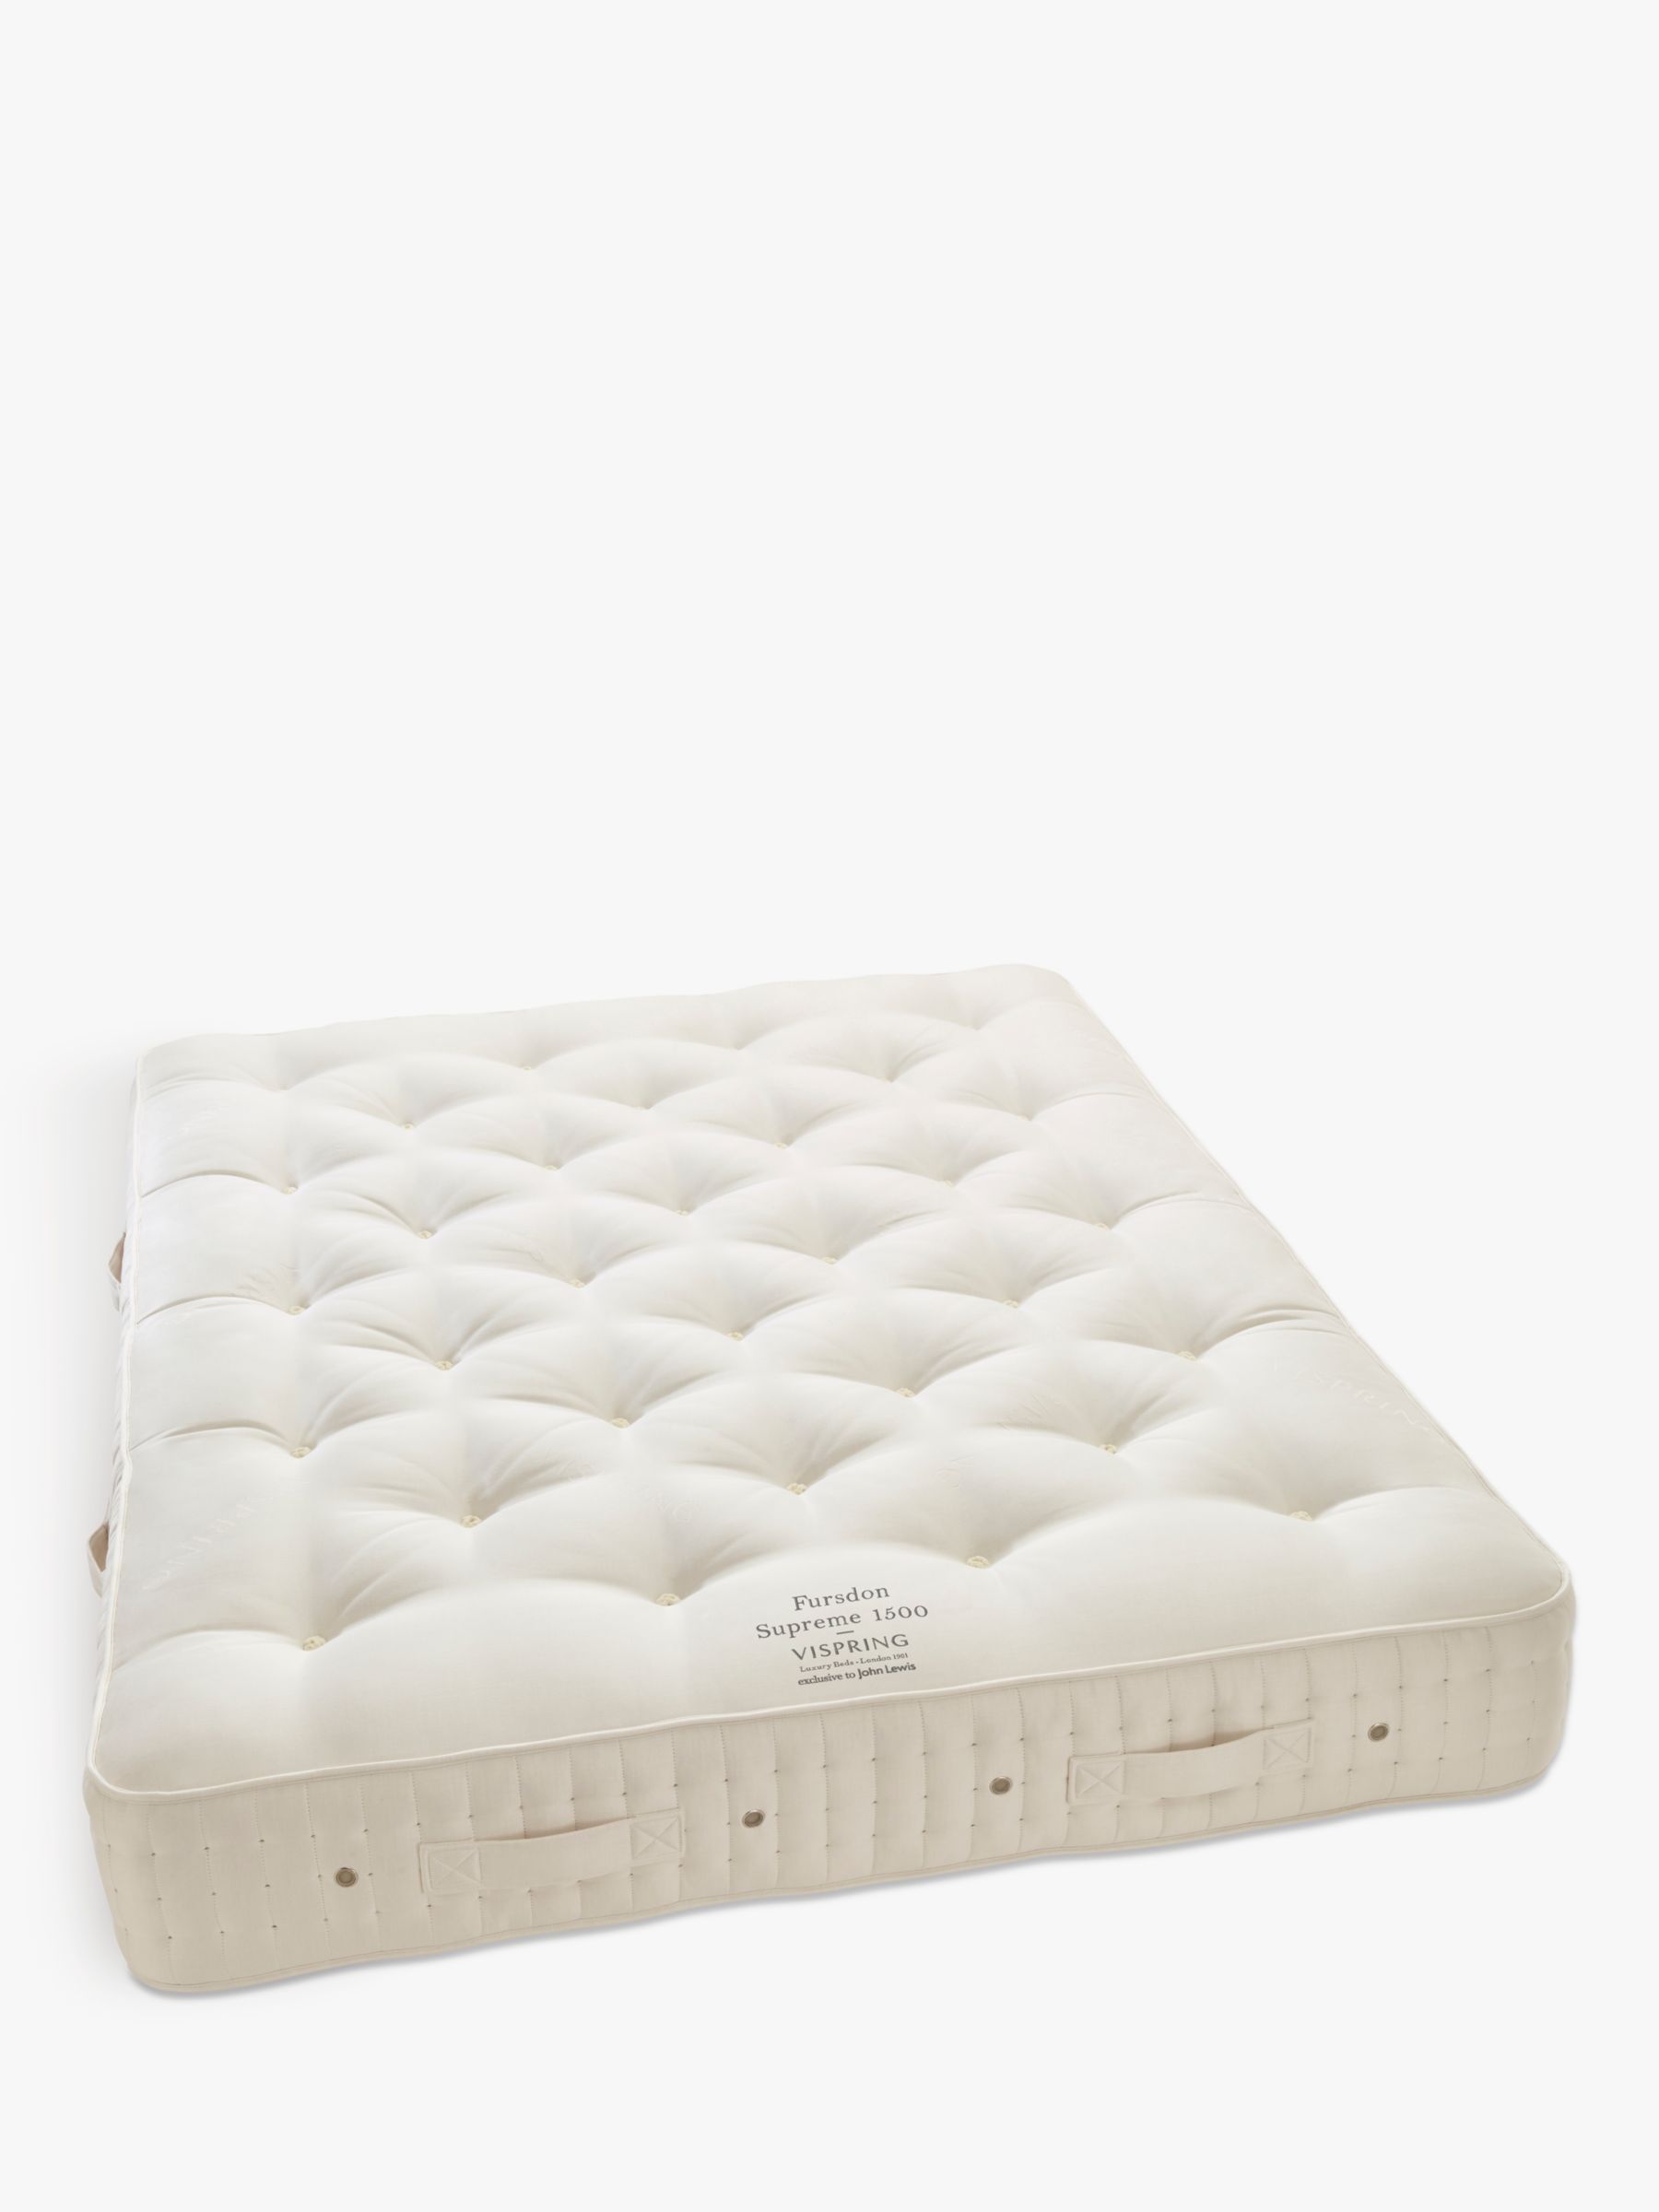 Photo of Vispring fursdon supreme 1500 pocket spring mattress medium tension super king size